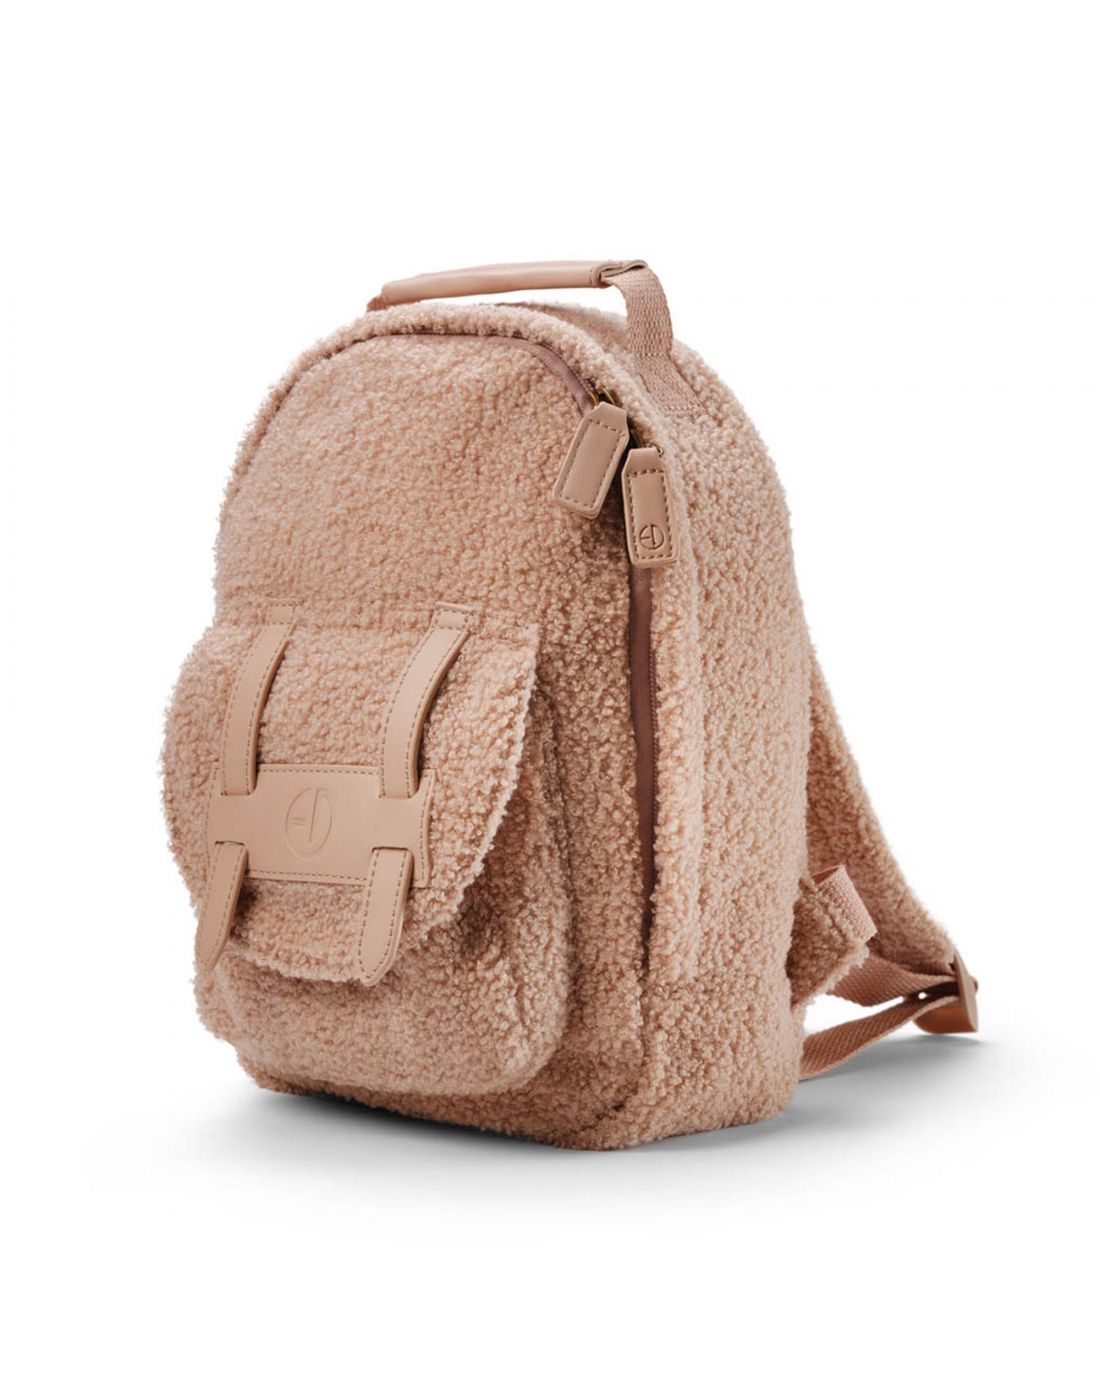 Elodie Details Kids Backpack-mini Pink Boucle